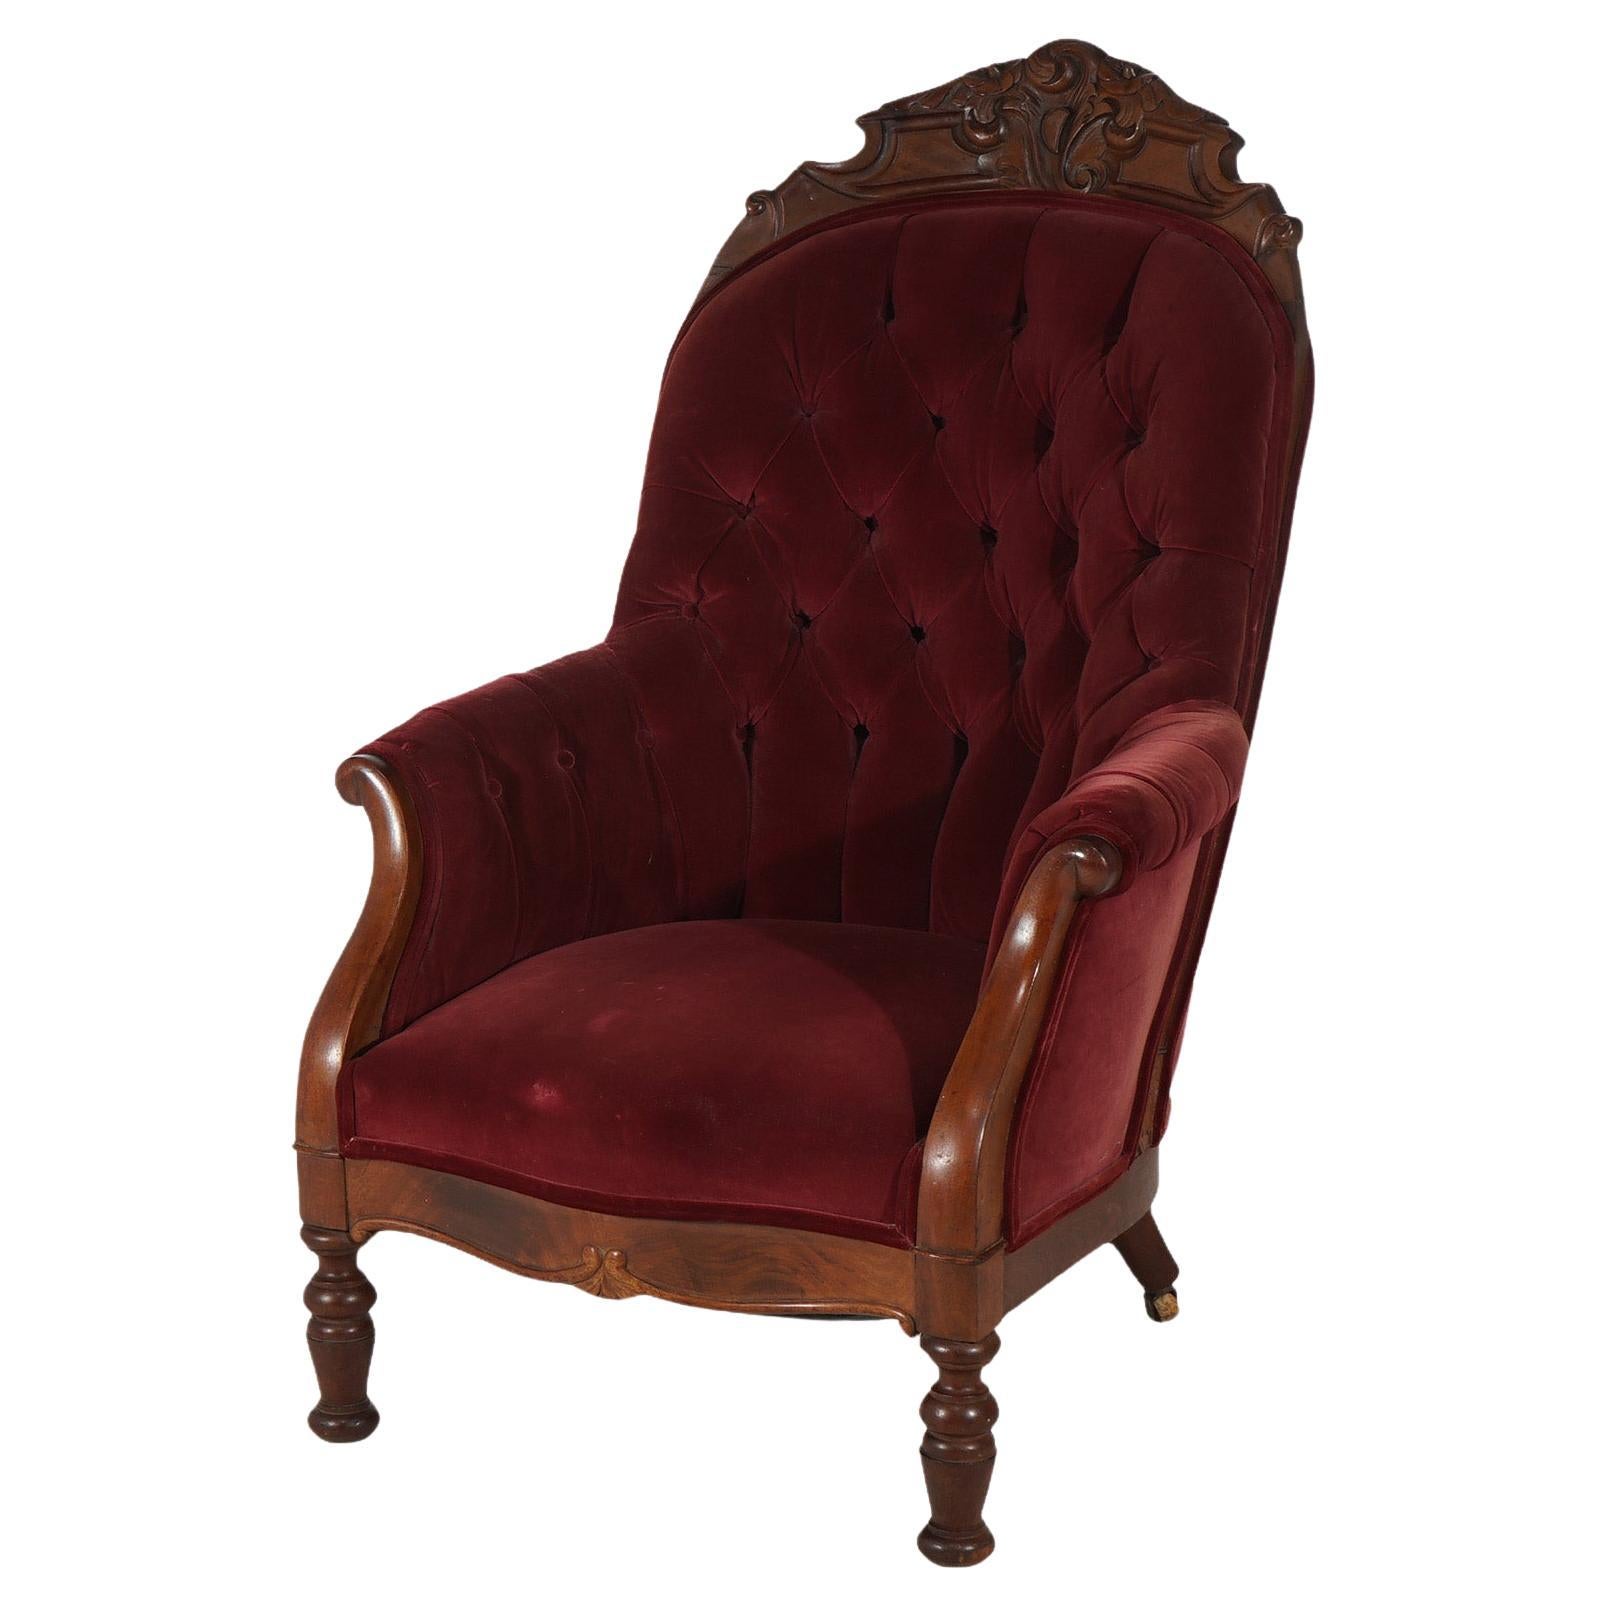 Victorian Carved Walnut Upholstered Barrel Back Gentleman’s Parlor Chair C1870